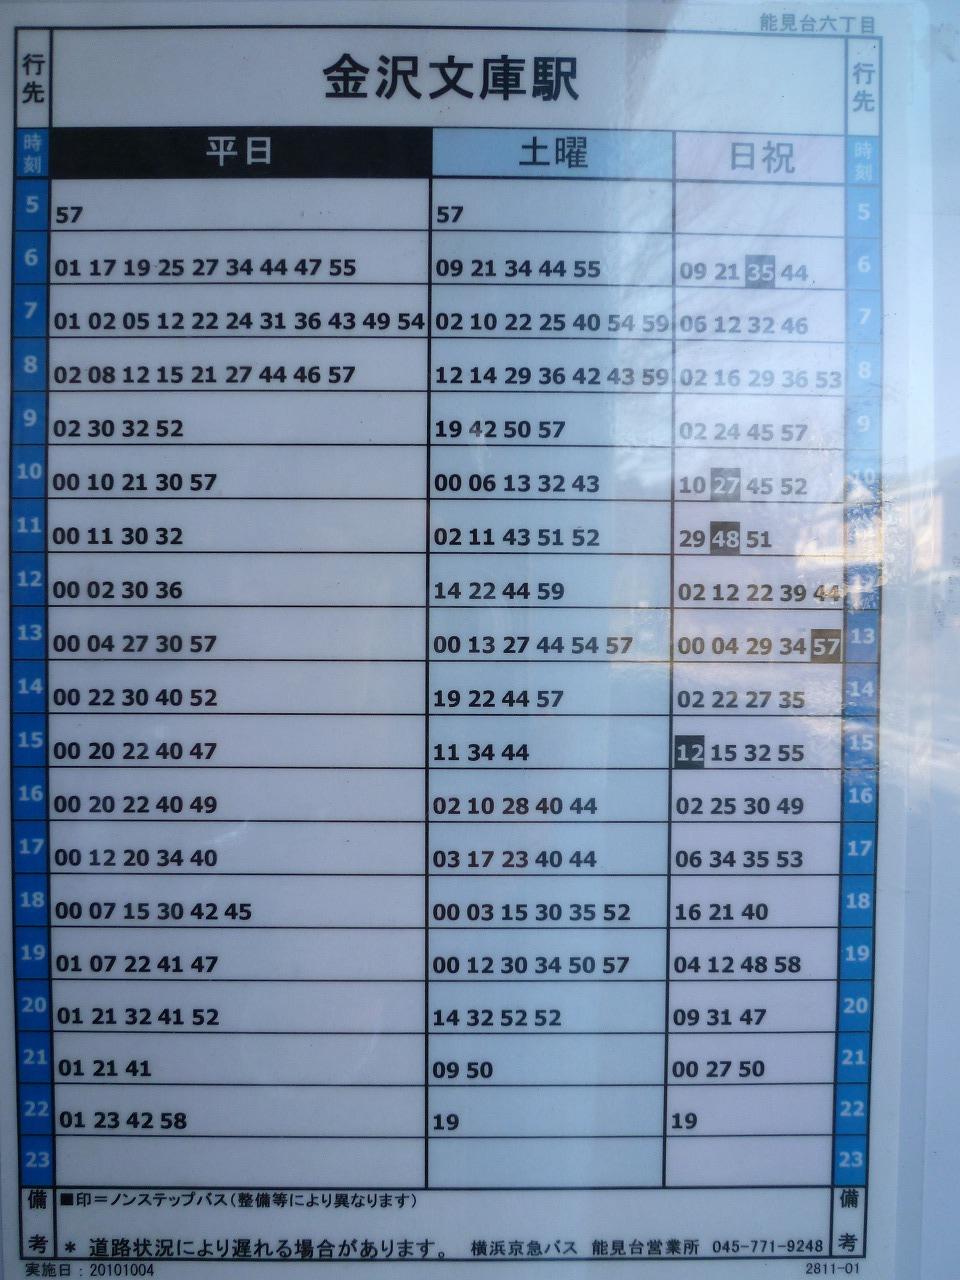 Other. Kanazawa Bunko flights time table